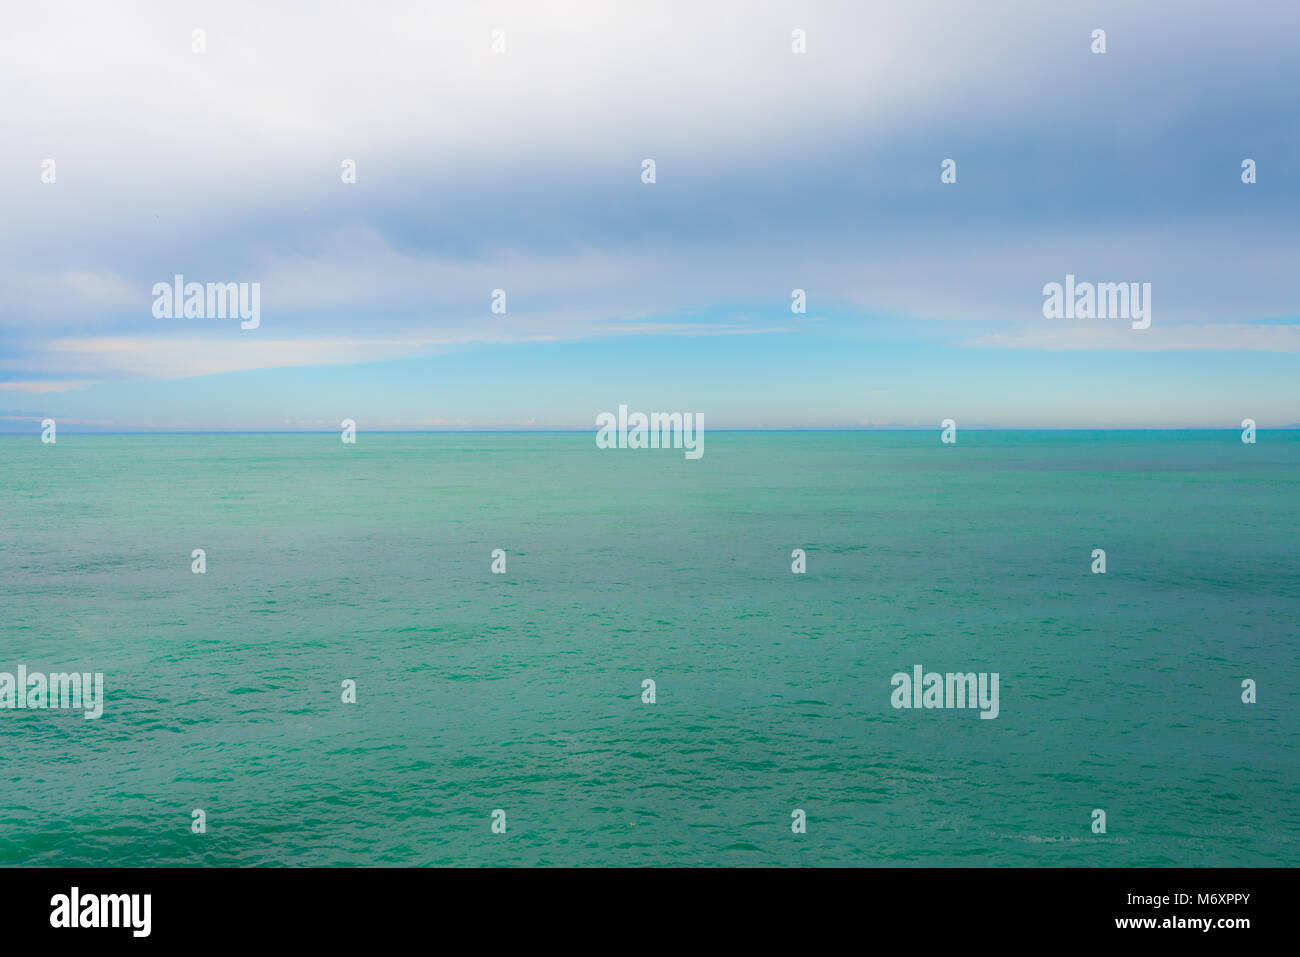 Leeren Horizont im offenen Meer Ozean mit pastellfarbenen matten Oberfläche Stockfoto